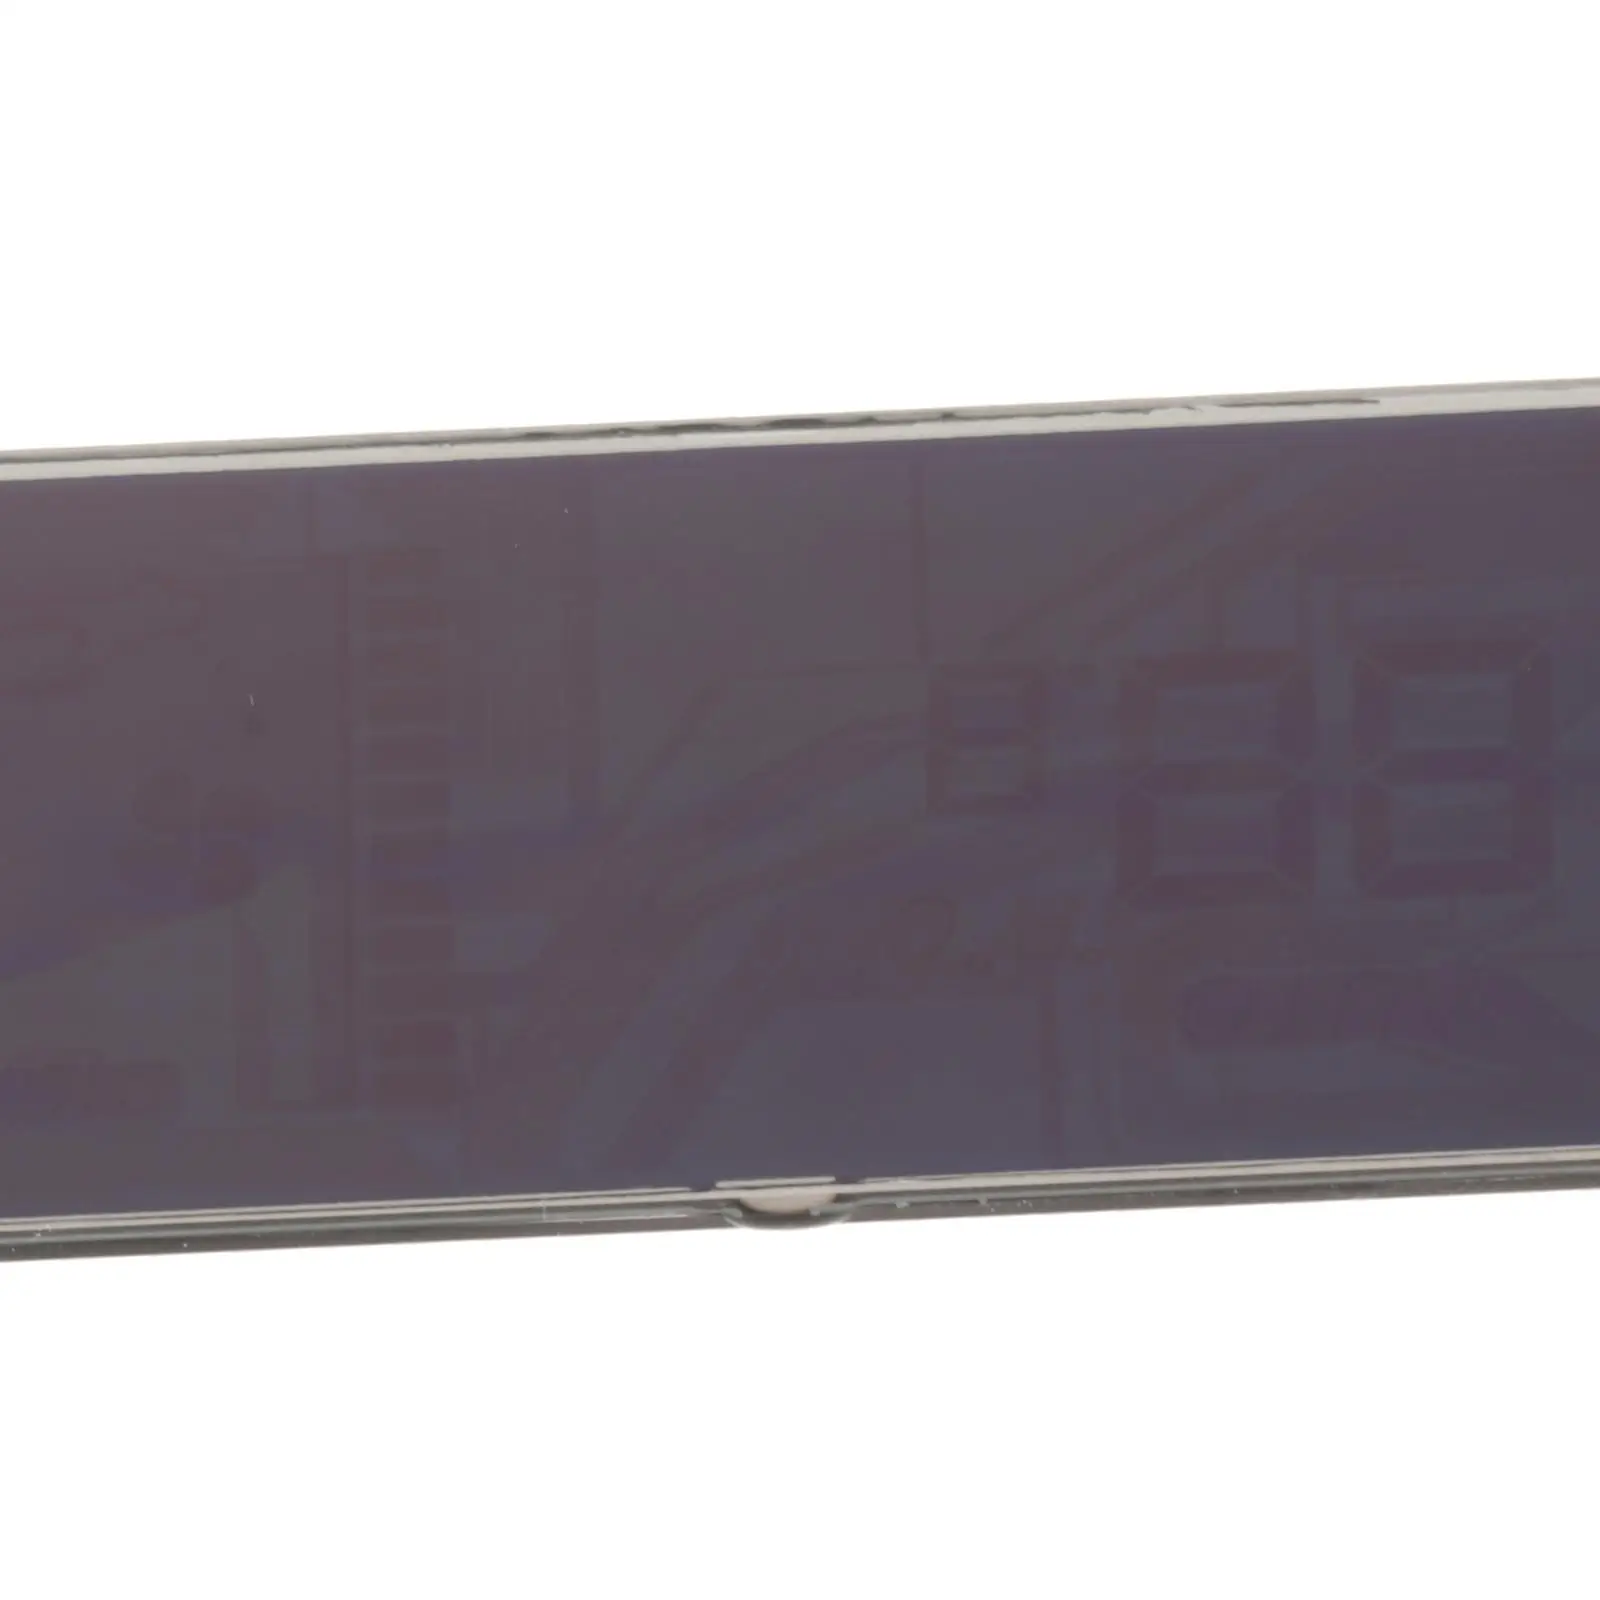 Display Replacement Repair LCD  for 911 996, 986 996, Ruf R Ruf 3400 S 1999-2002 Ruf 